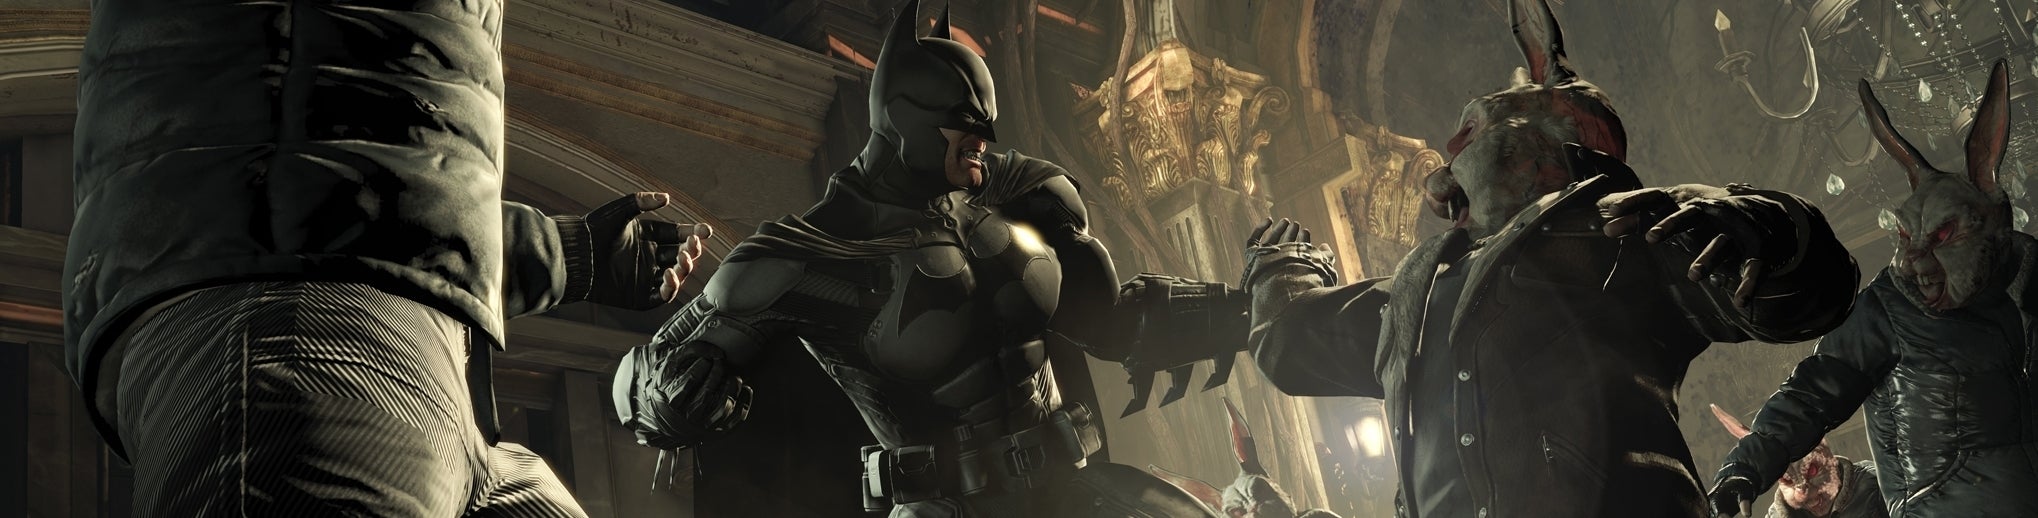 Imagem para Batman: Arkham Origins - Análise